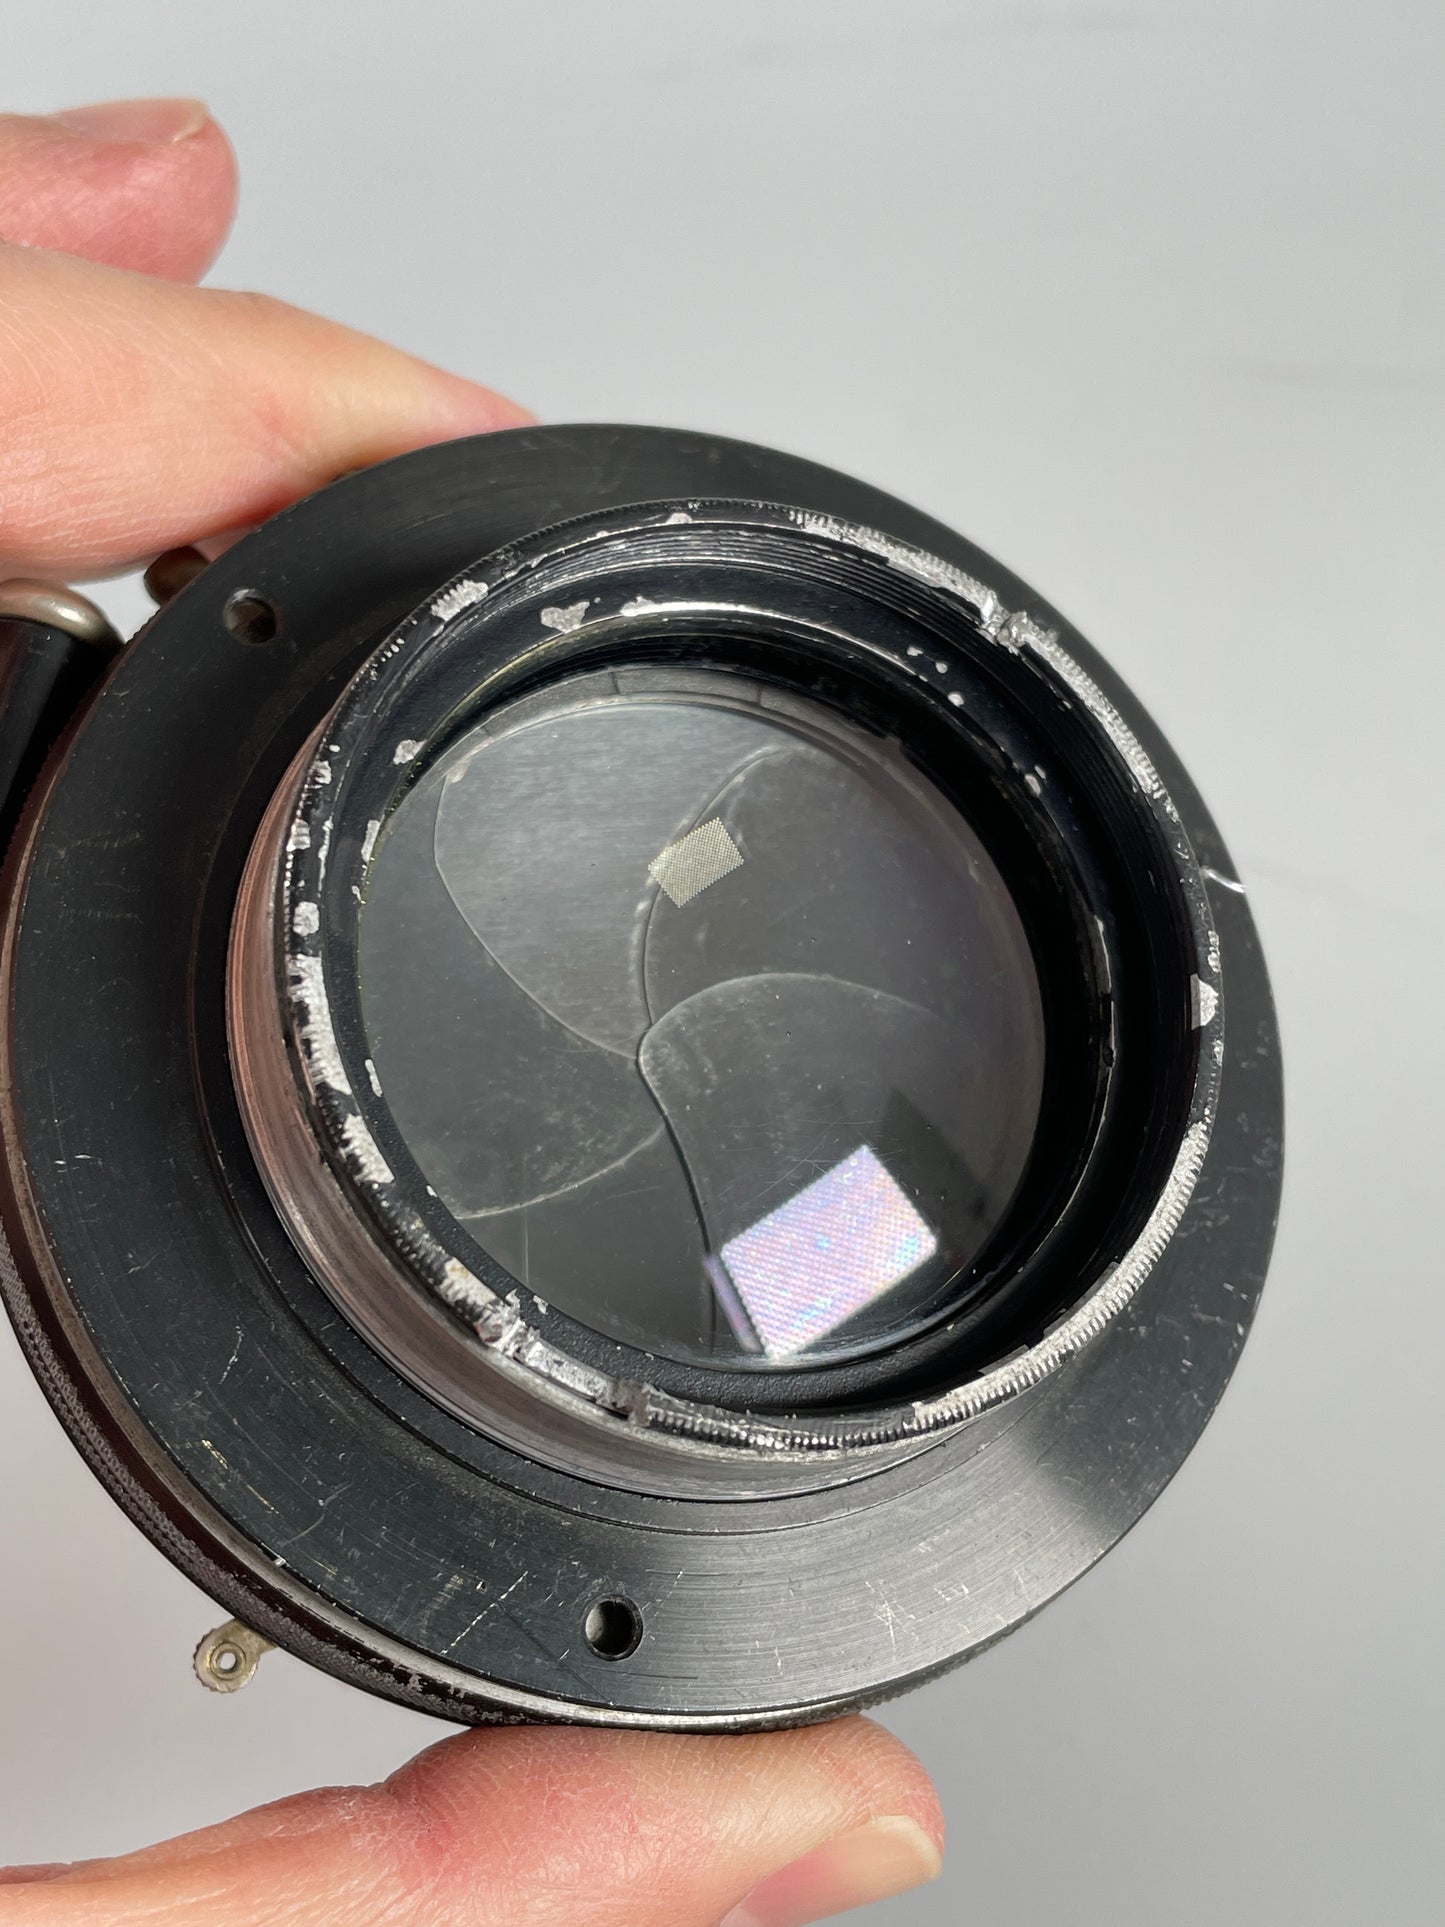 Voigtlander Sohn Heliar 21cm 210mm f4.5 large format lens